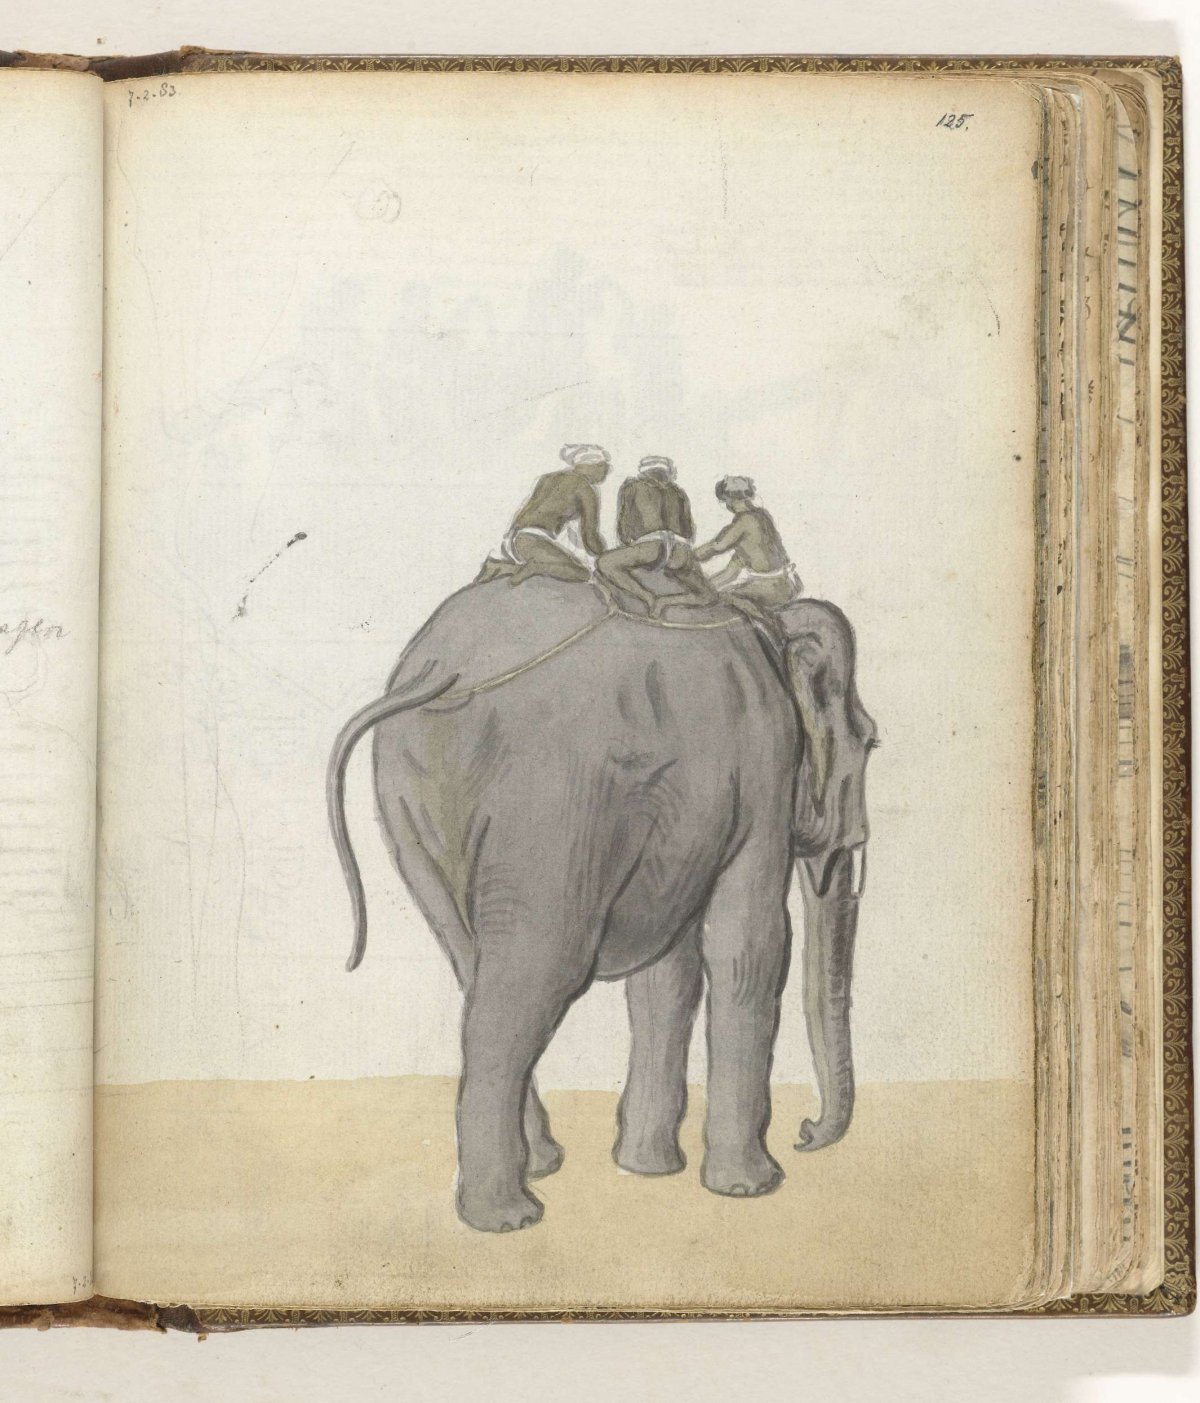 Binding an elephant, Jan Brandes, 1785